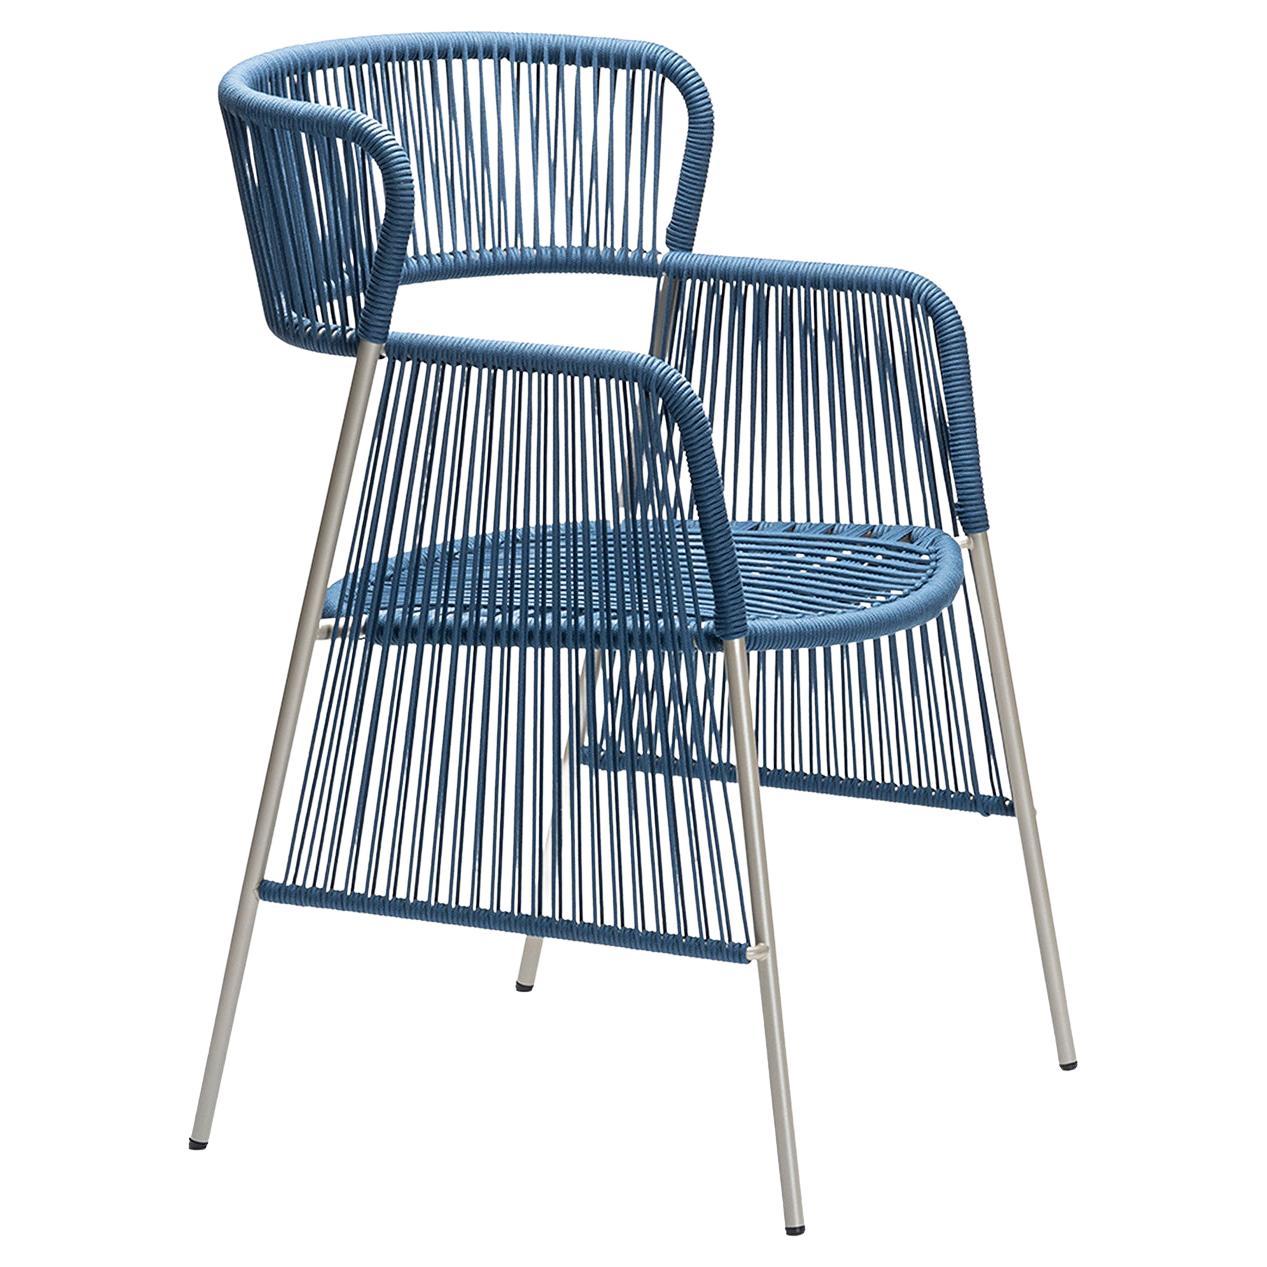 Altana SP Blue Chair by Antonio De Marco